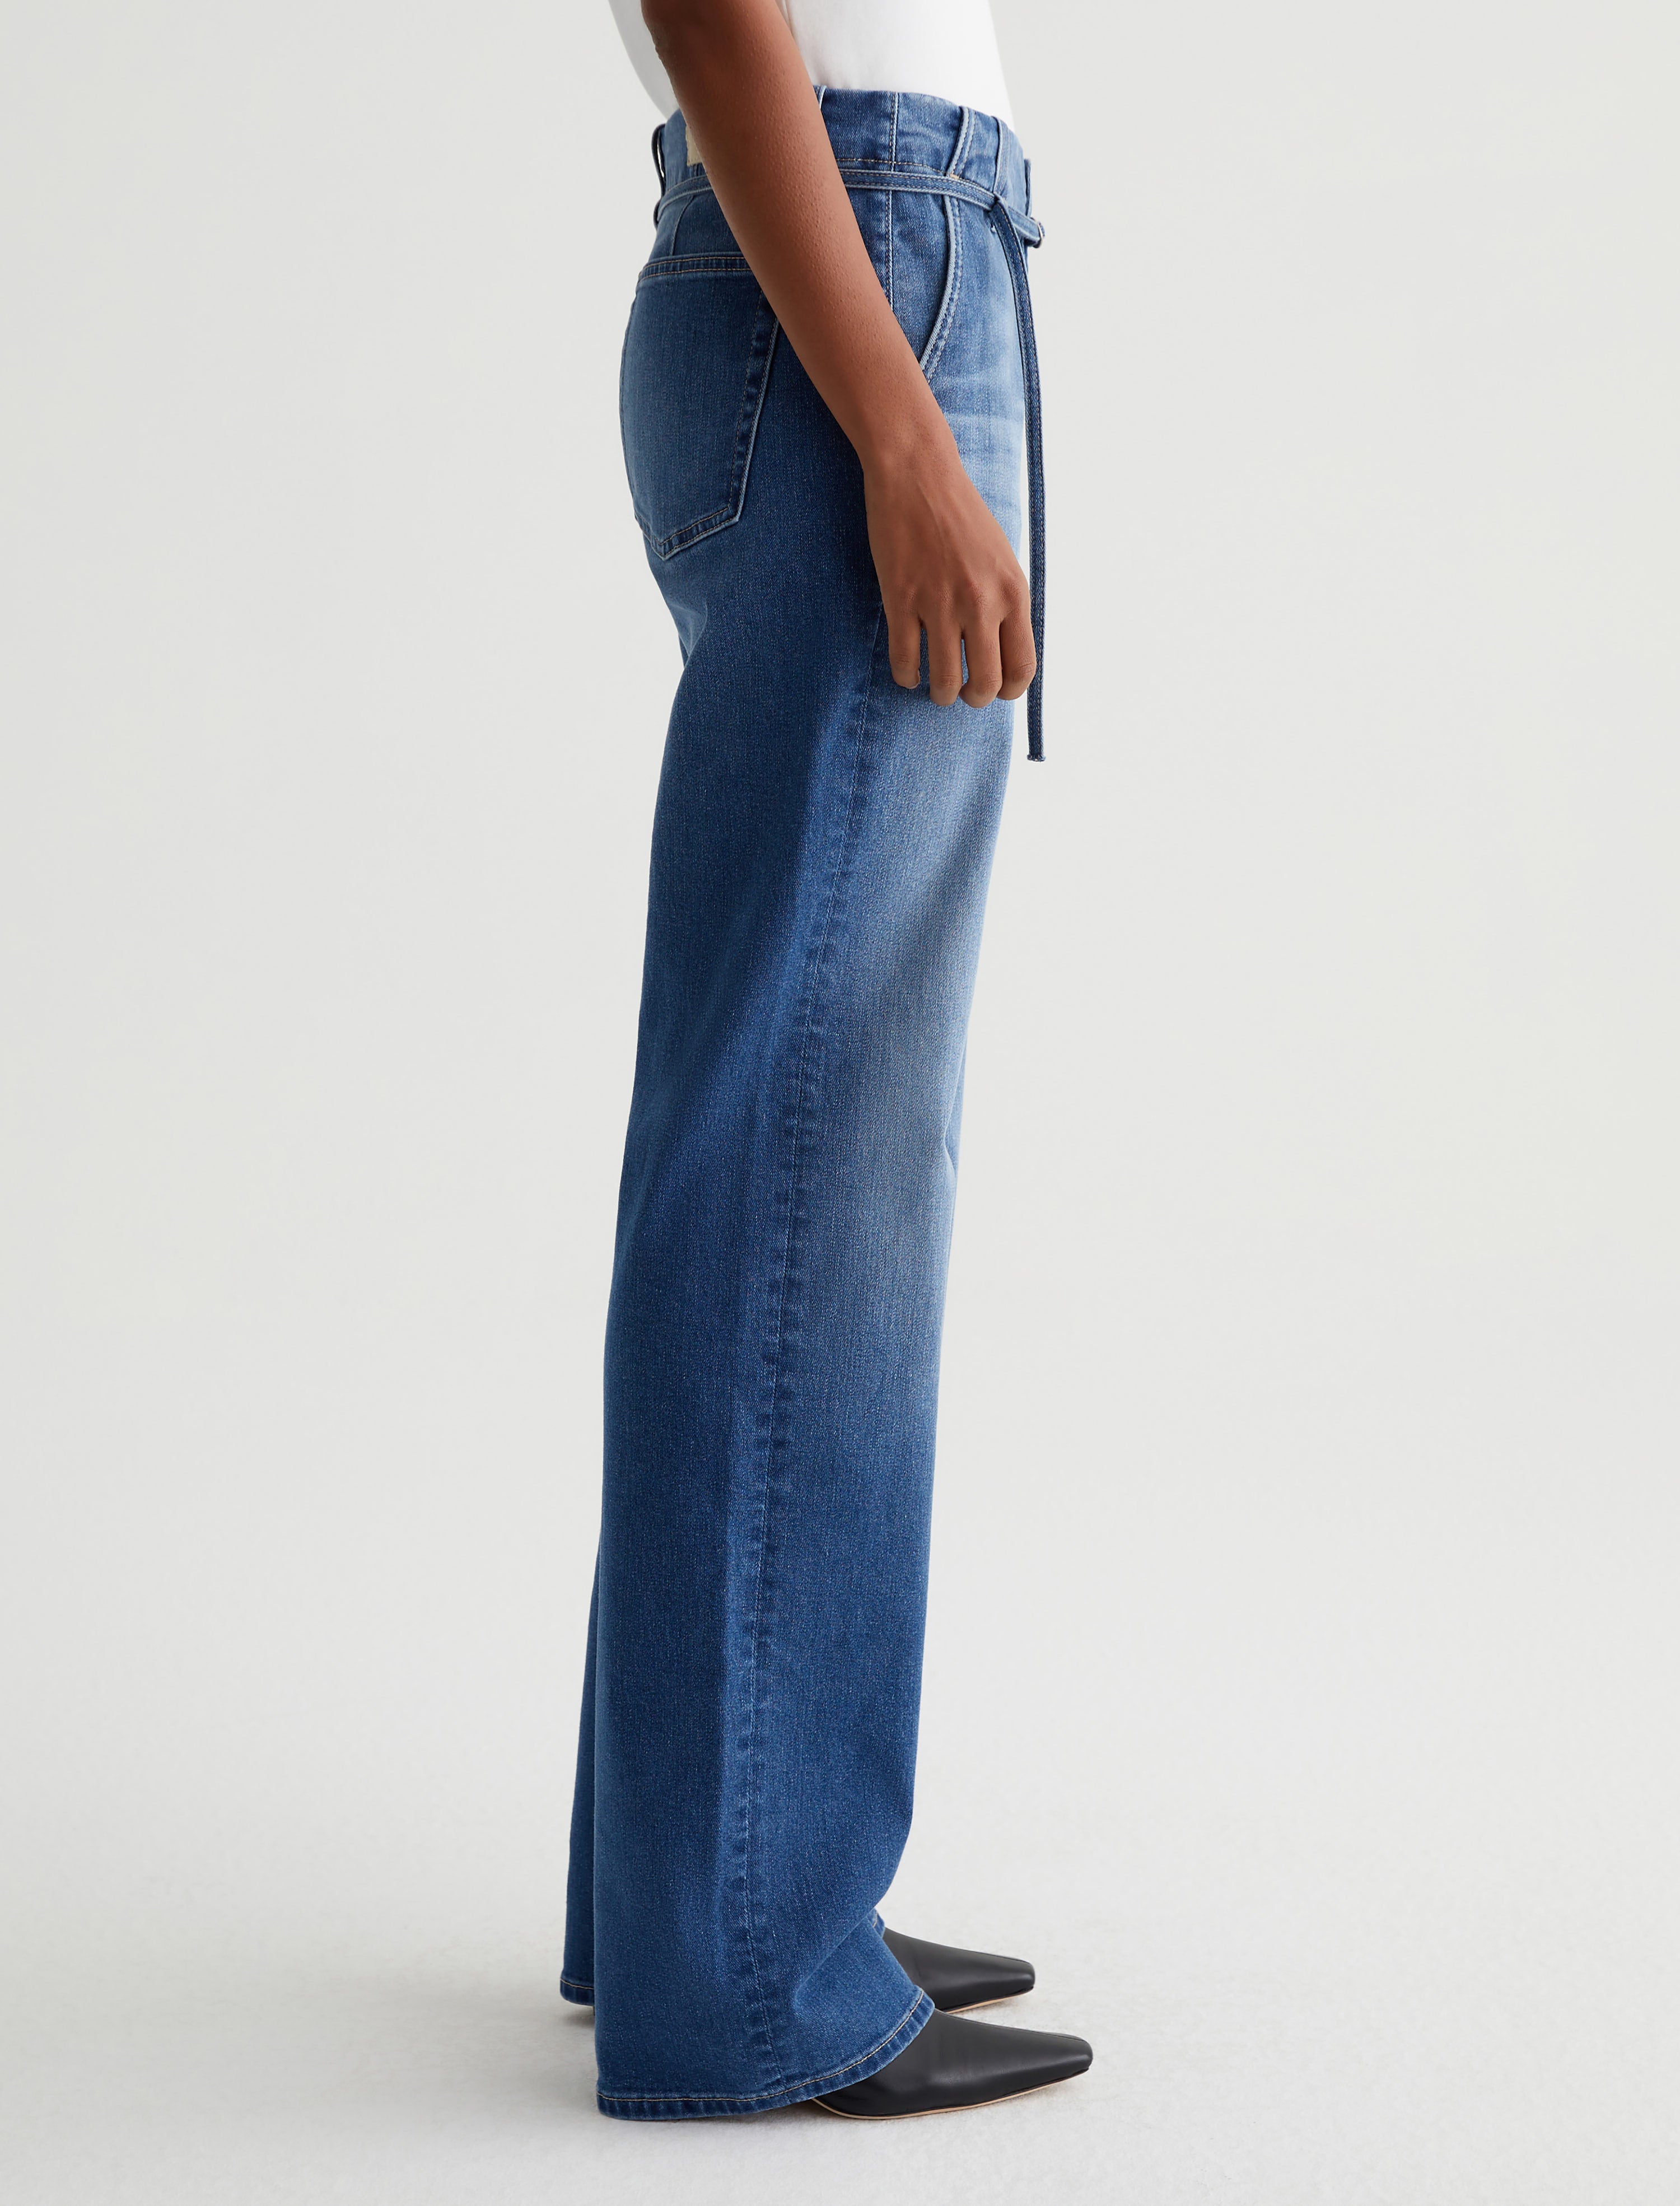 Plus Women's Super Soft Denim-Like Twill Jeans | Ruby Rd.